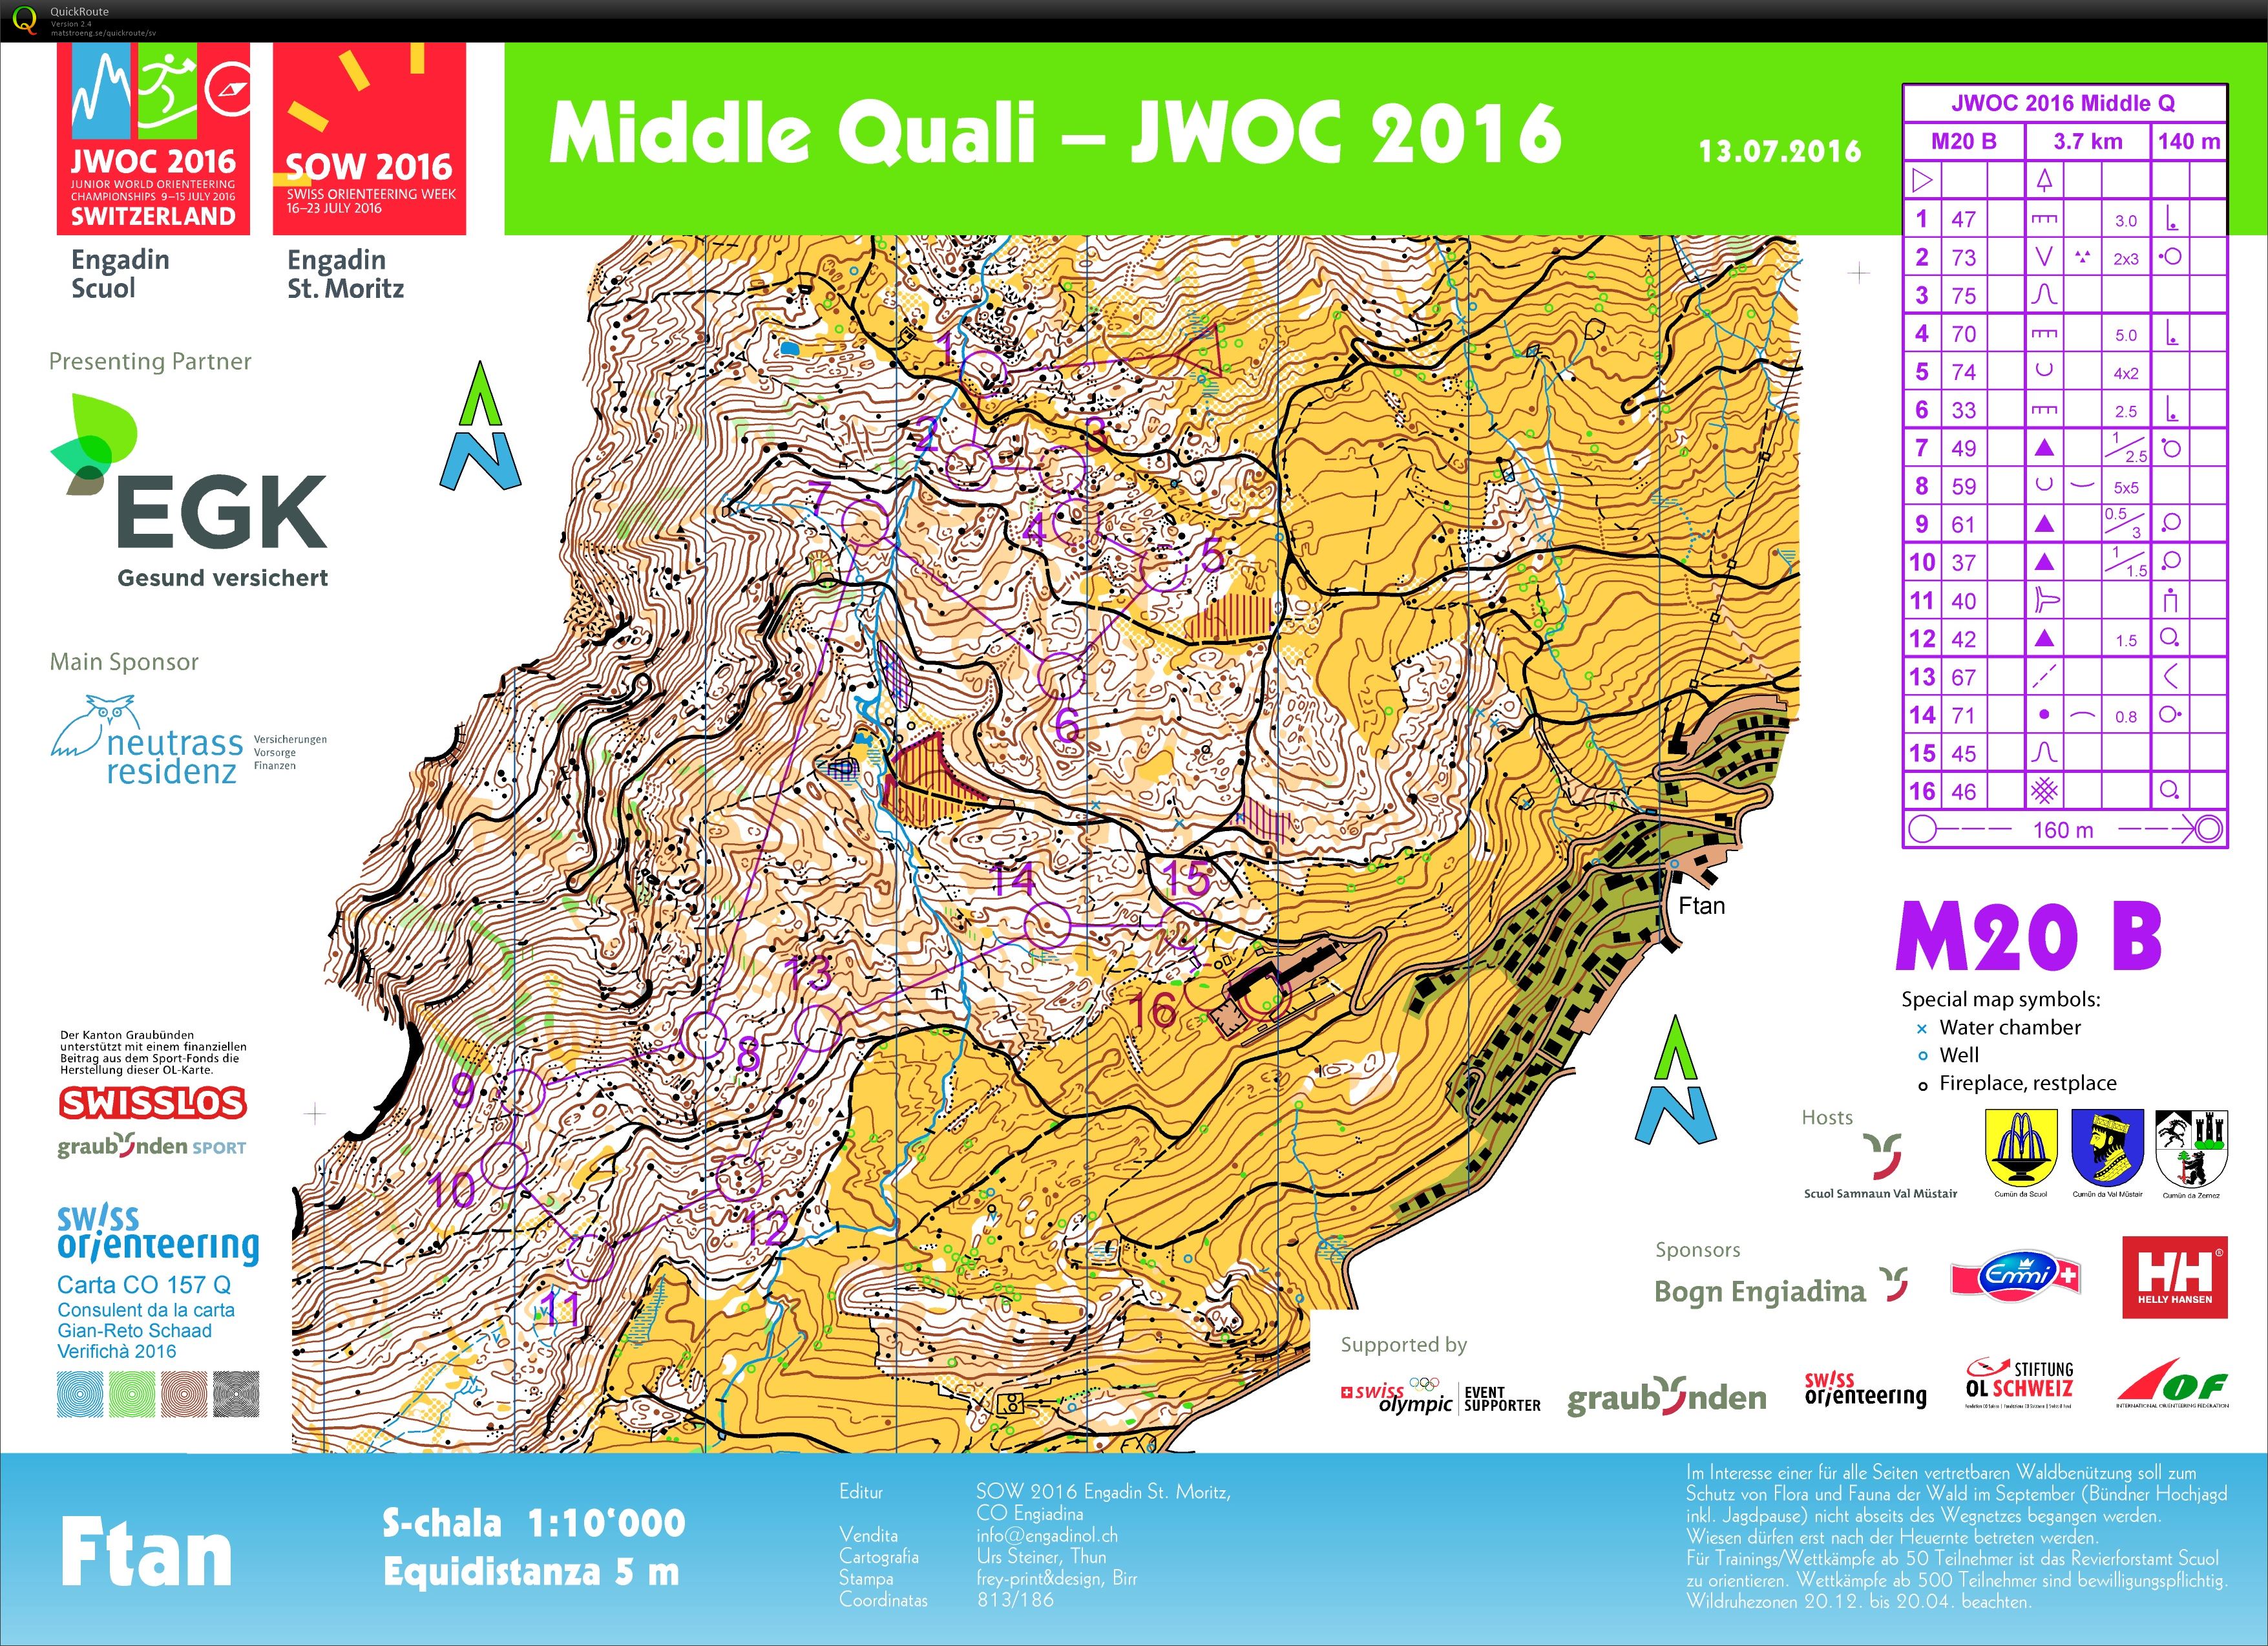 JWOC Middle Qualification heat B (13-07-2016)